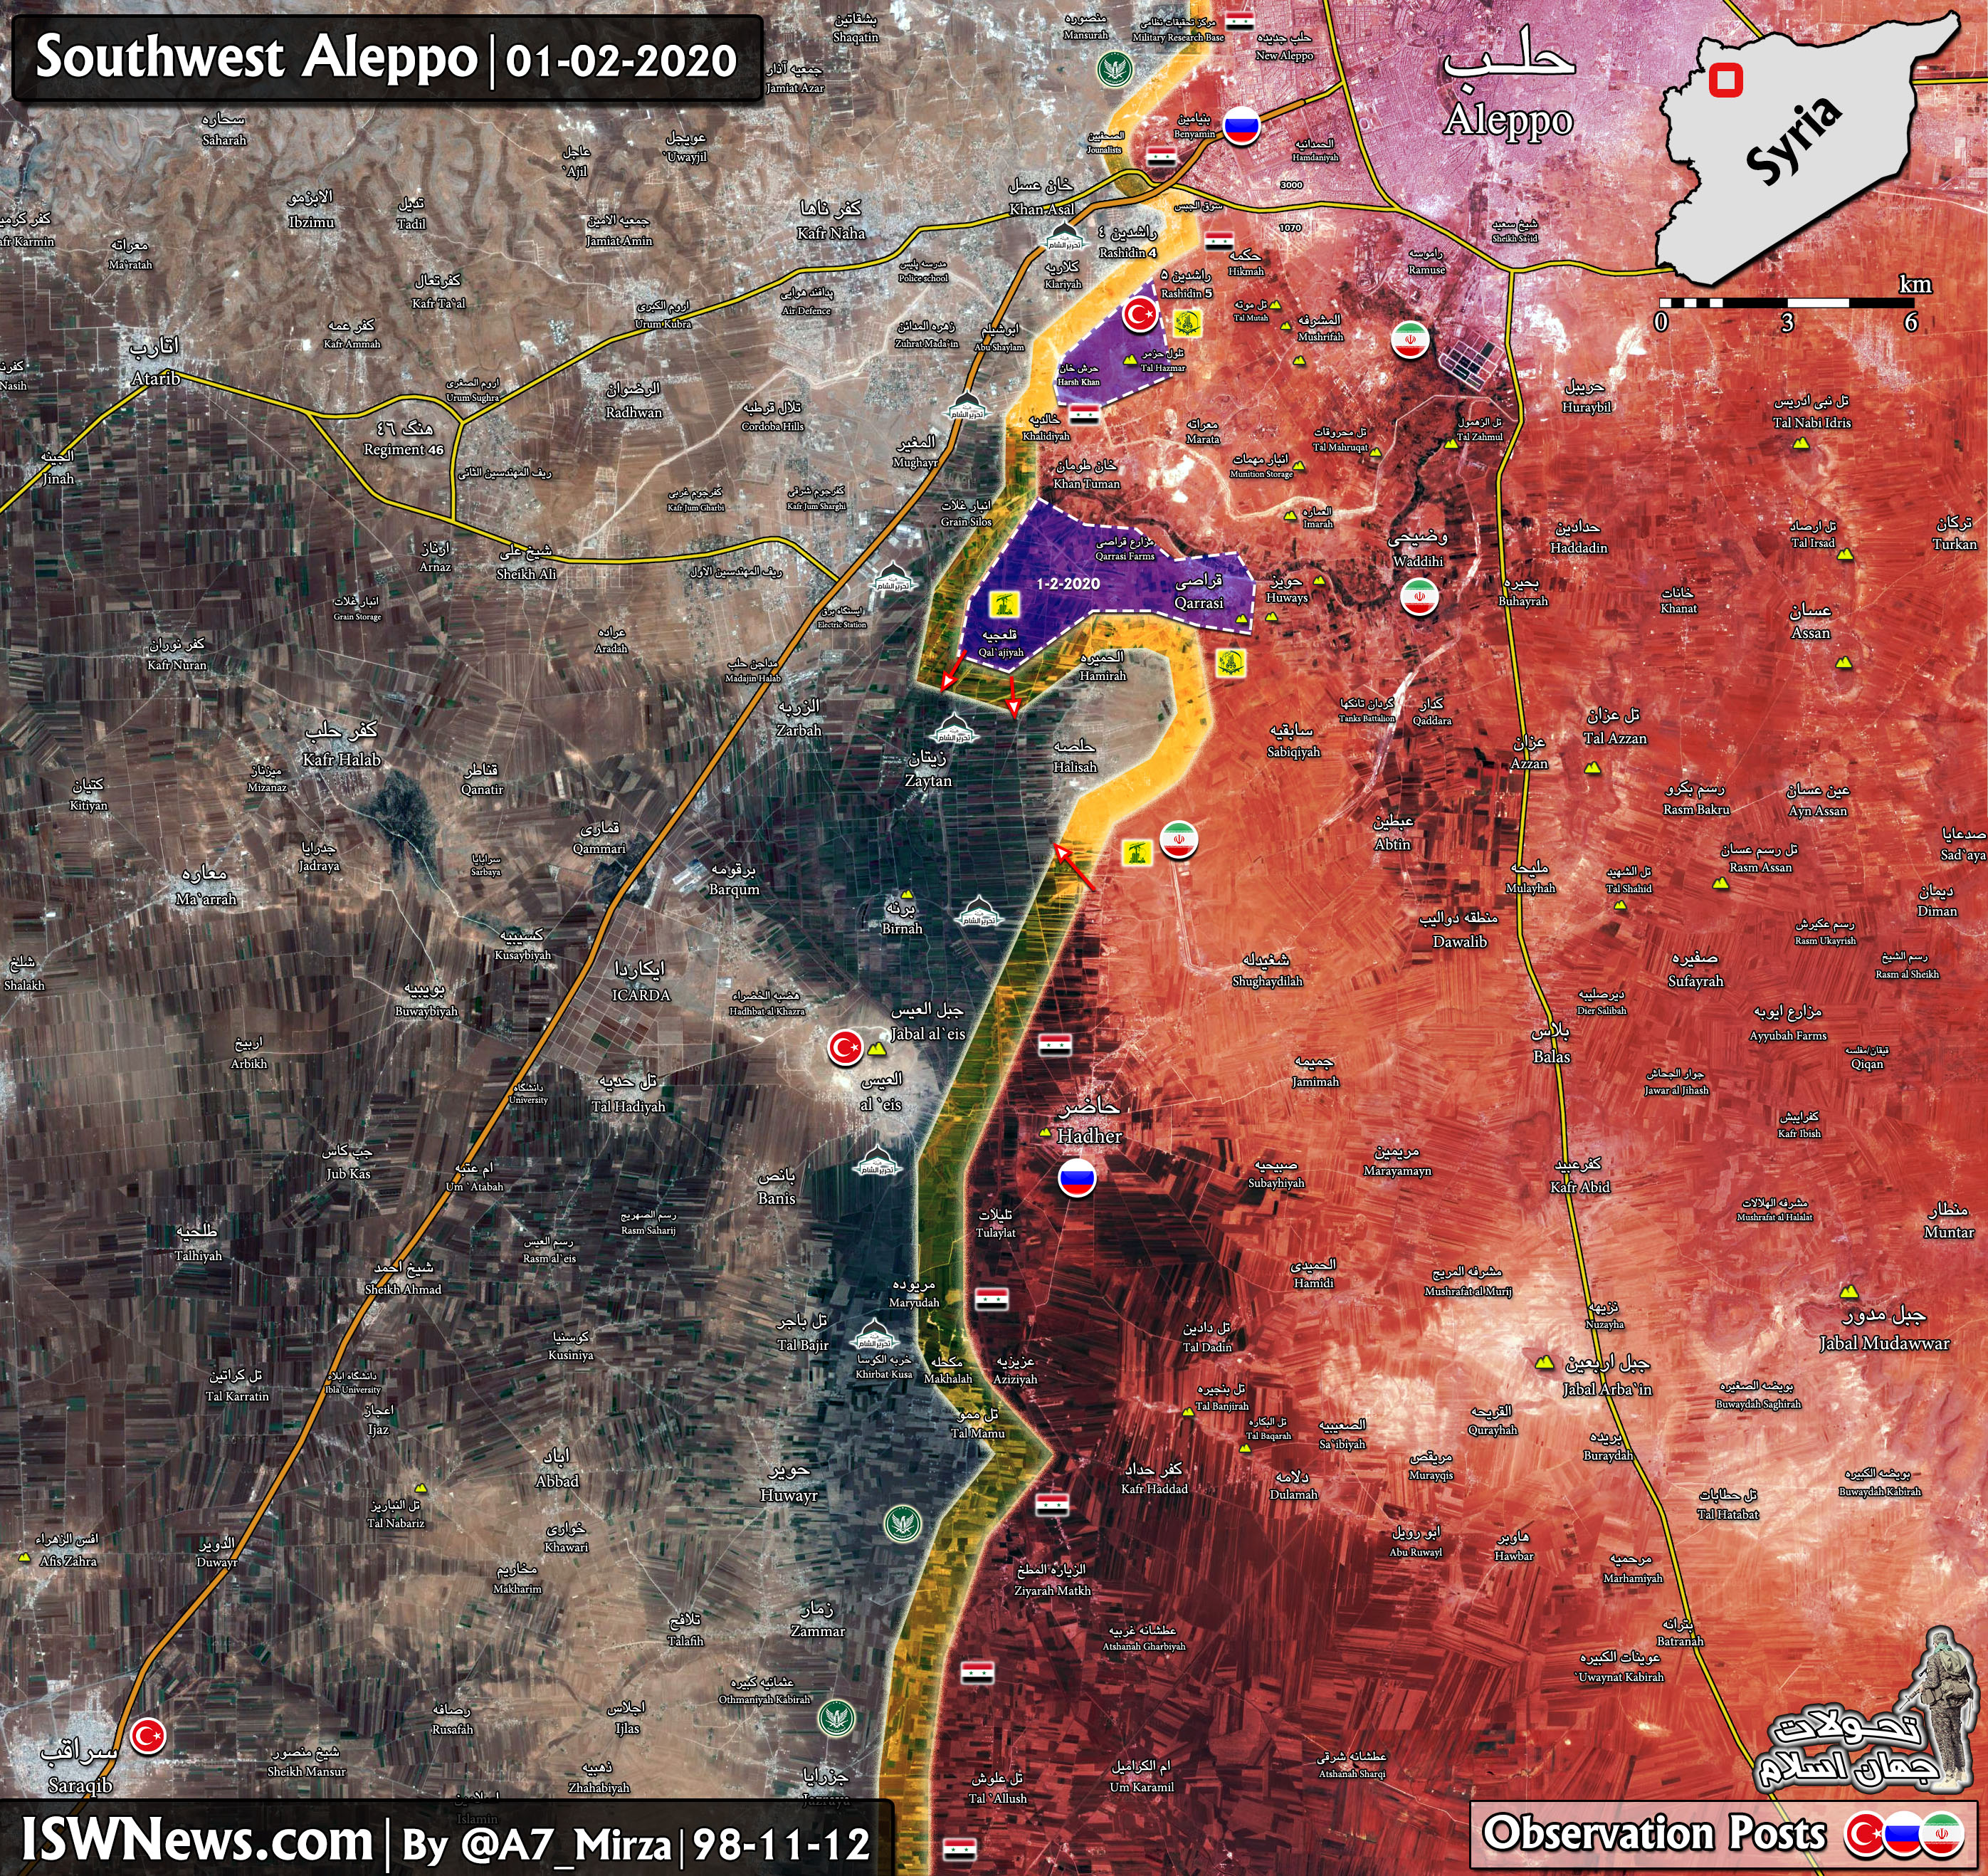 Southwest-Aleppo-1feb20-12bah98.jpg